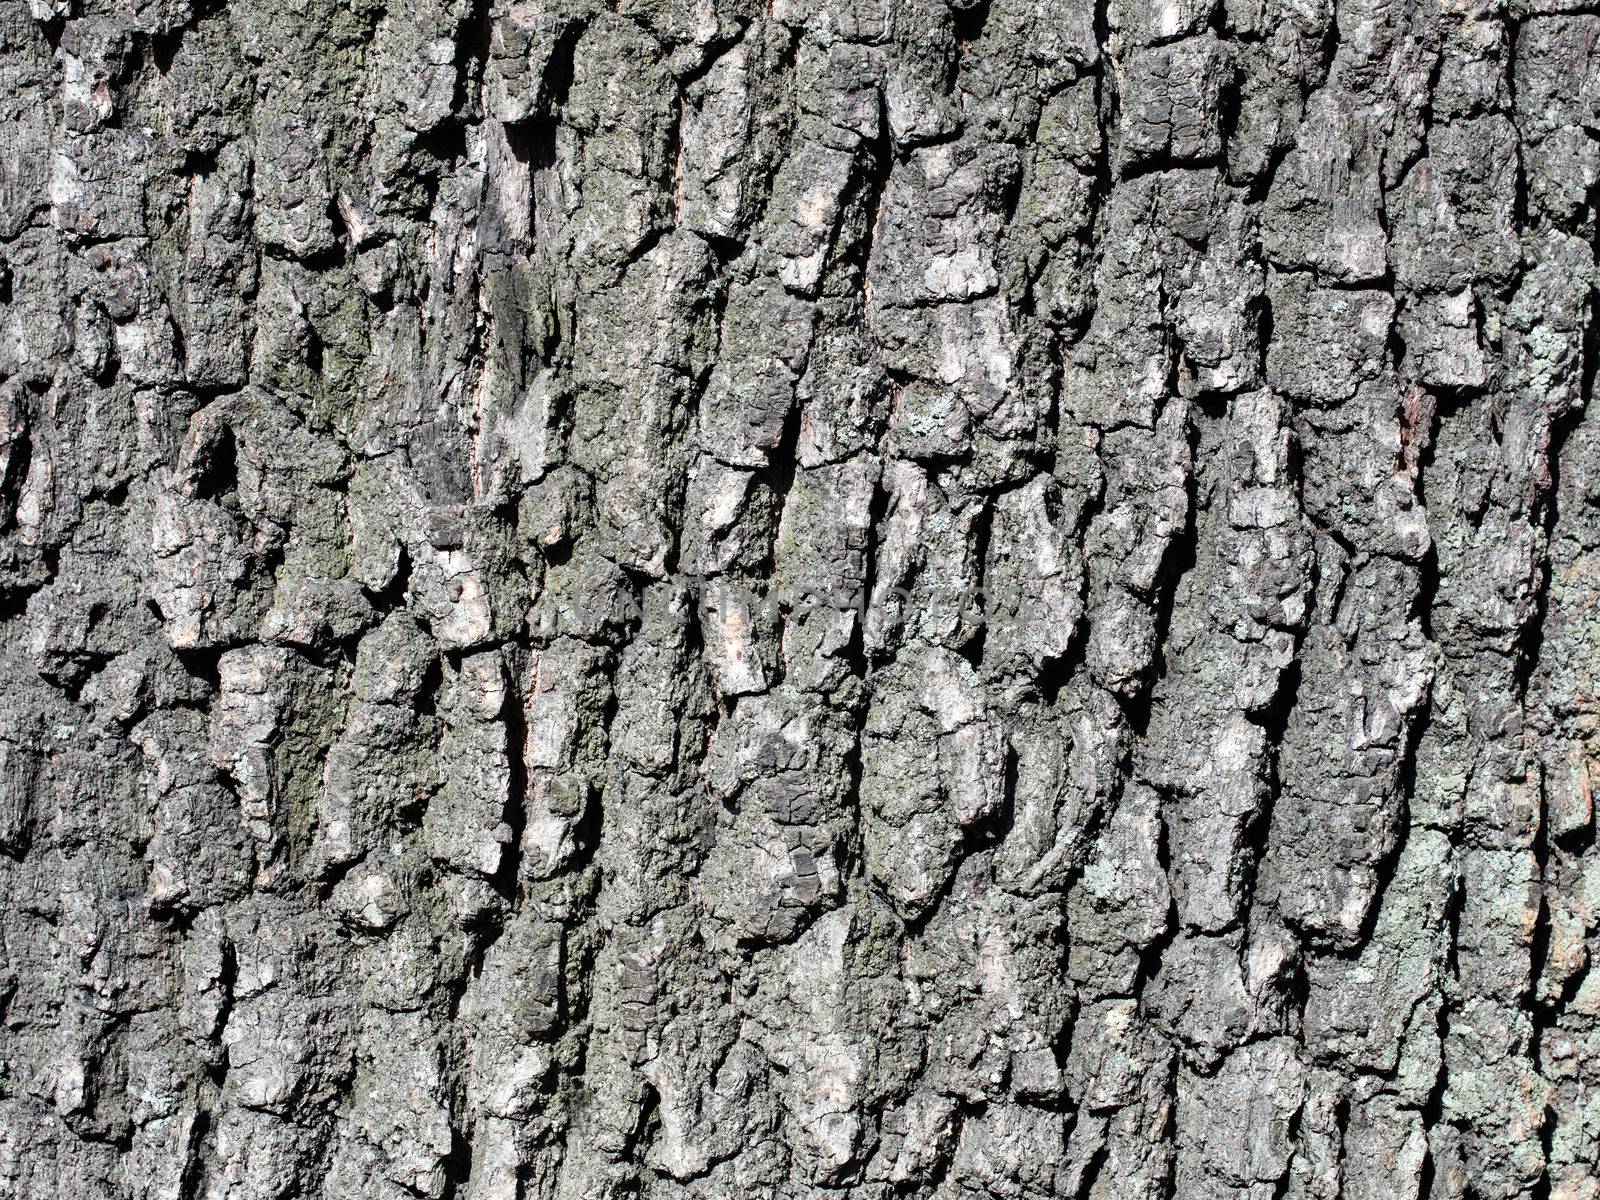 oak bark tree background close up shot of detail by Sergii